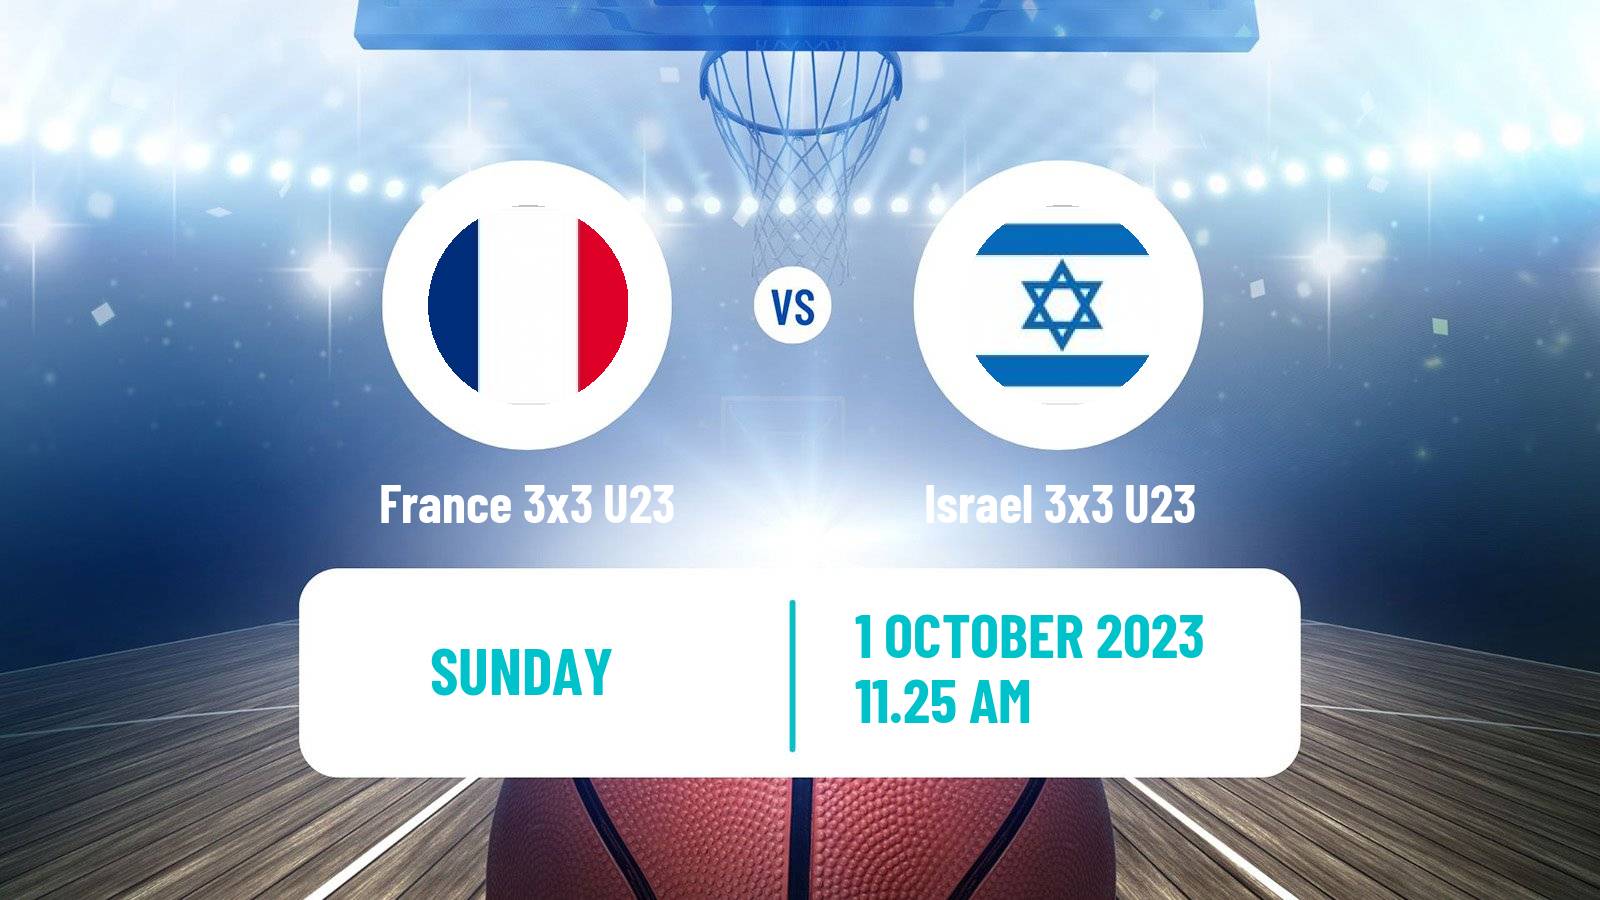 Basketball World Cup Basketball 3x3 U23 France 3x3 U23 - Israel 3x3 U23